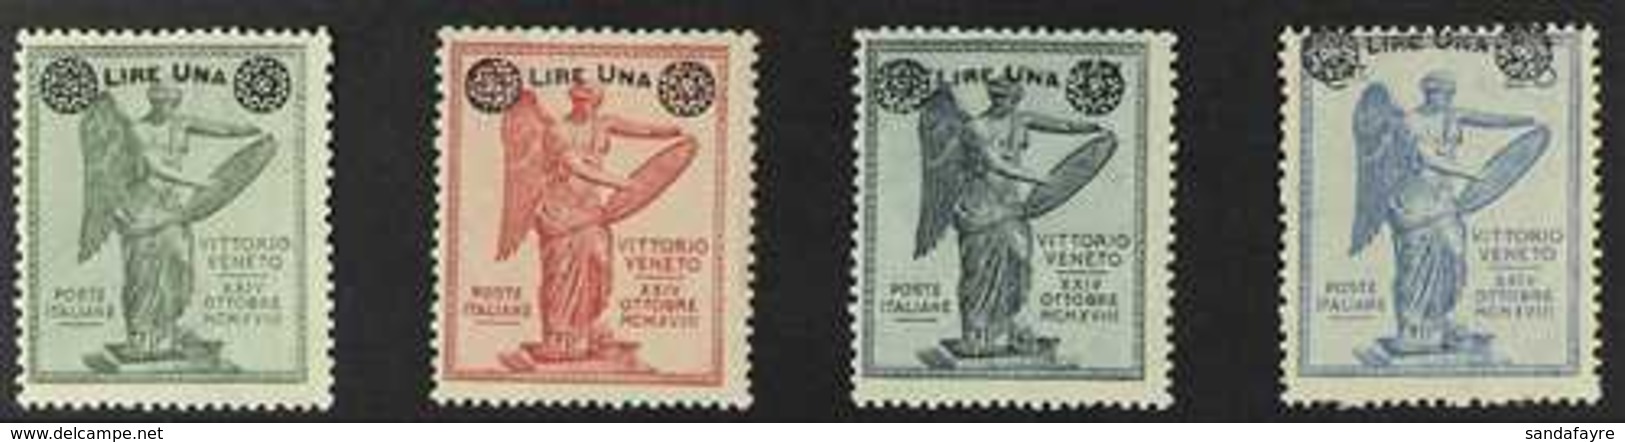 1924 "Victory" Surcharges Set (Sass. S. 30, Scott 171/74, SG 161/64), Never Hinged Mint. (4 Stamps) For More Images, Ple - Non Classés